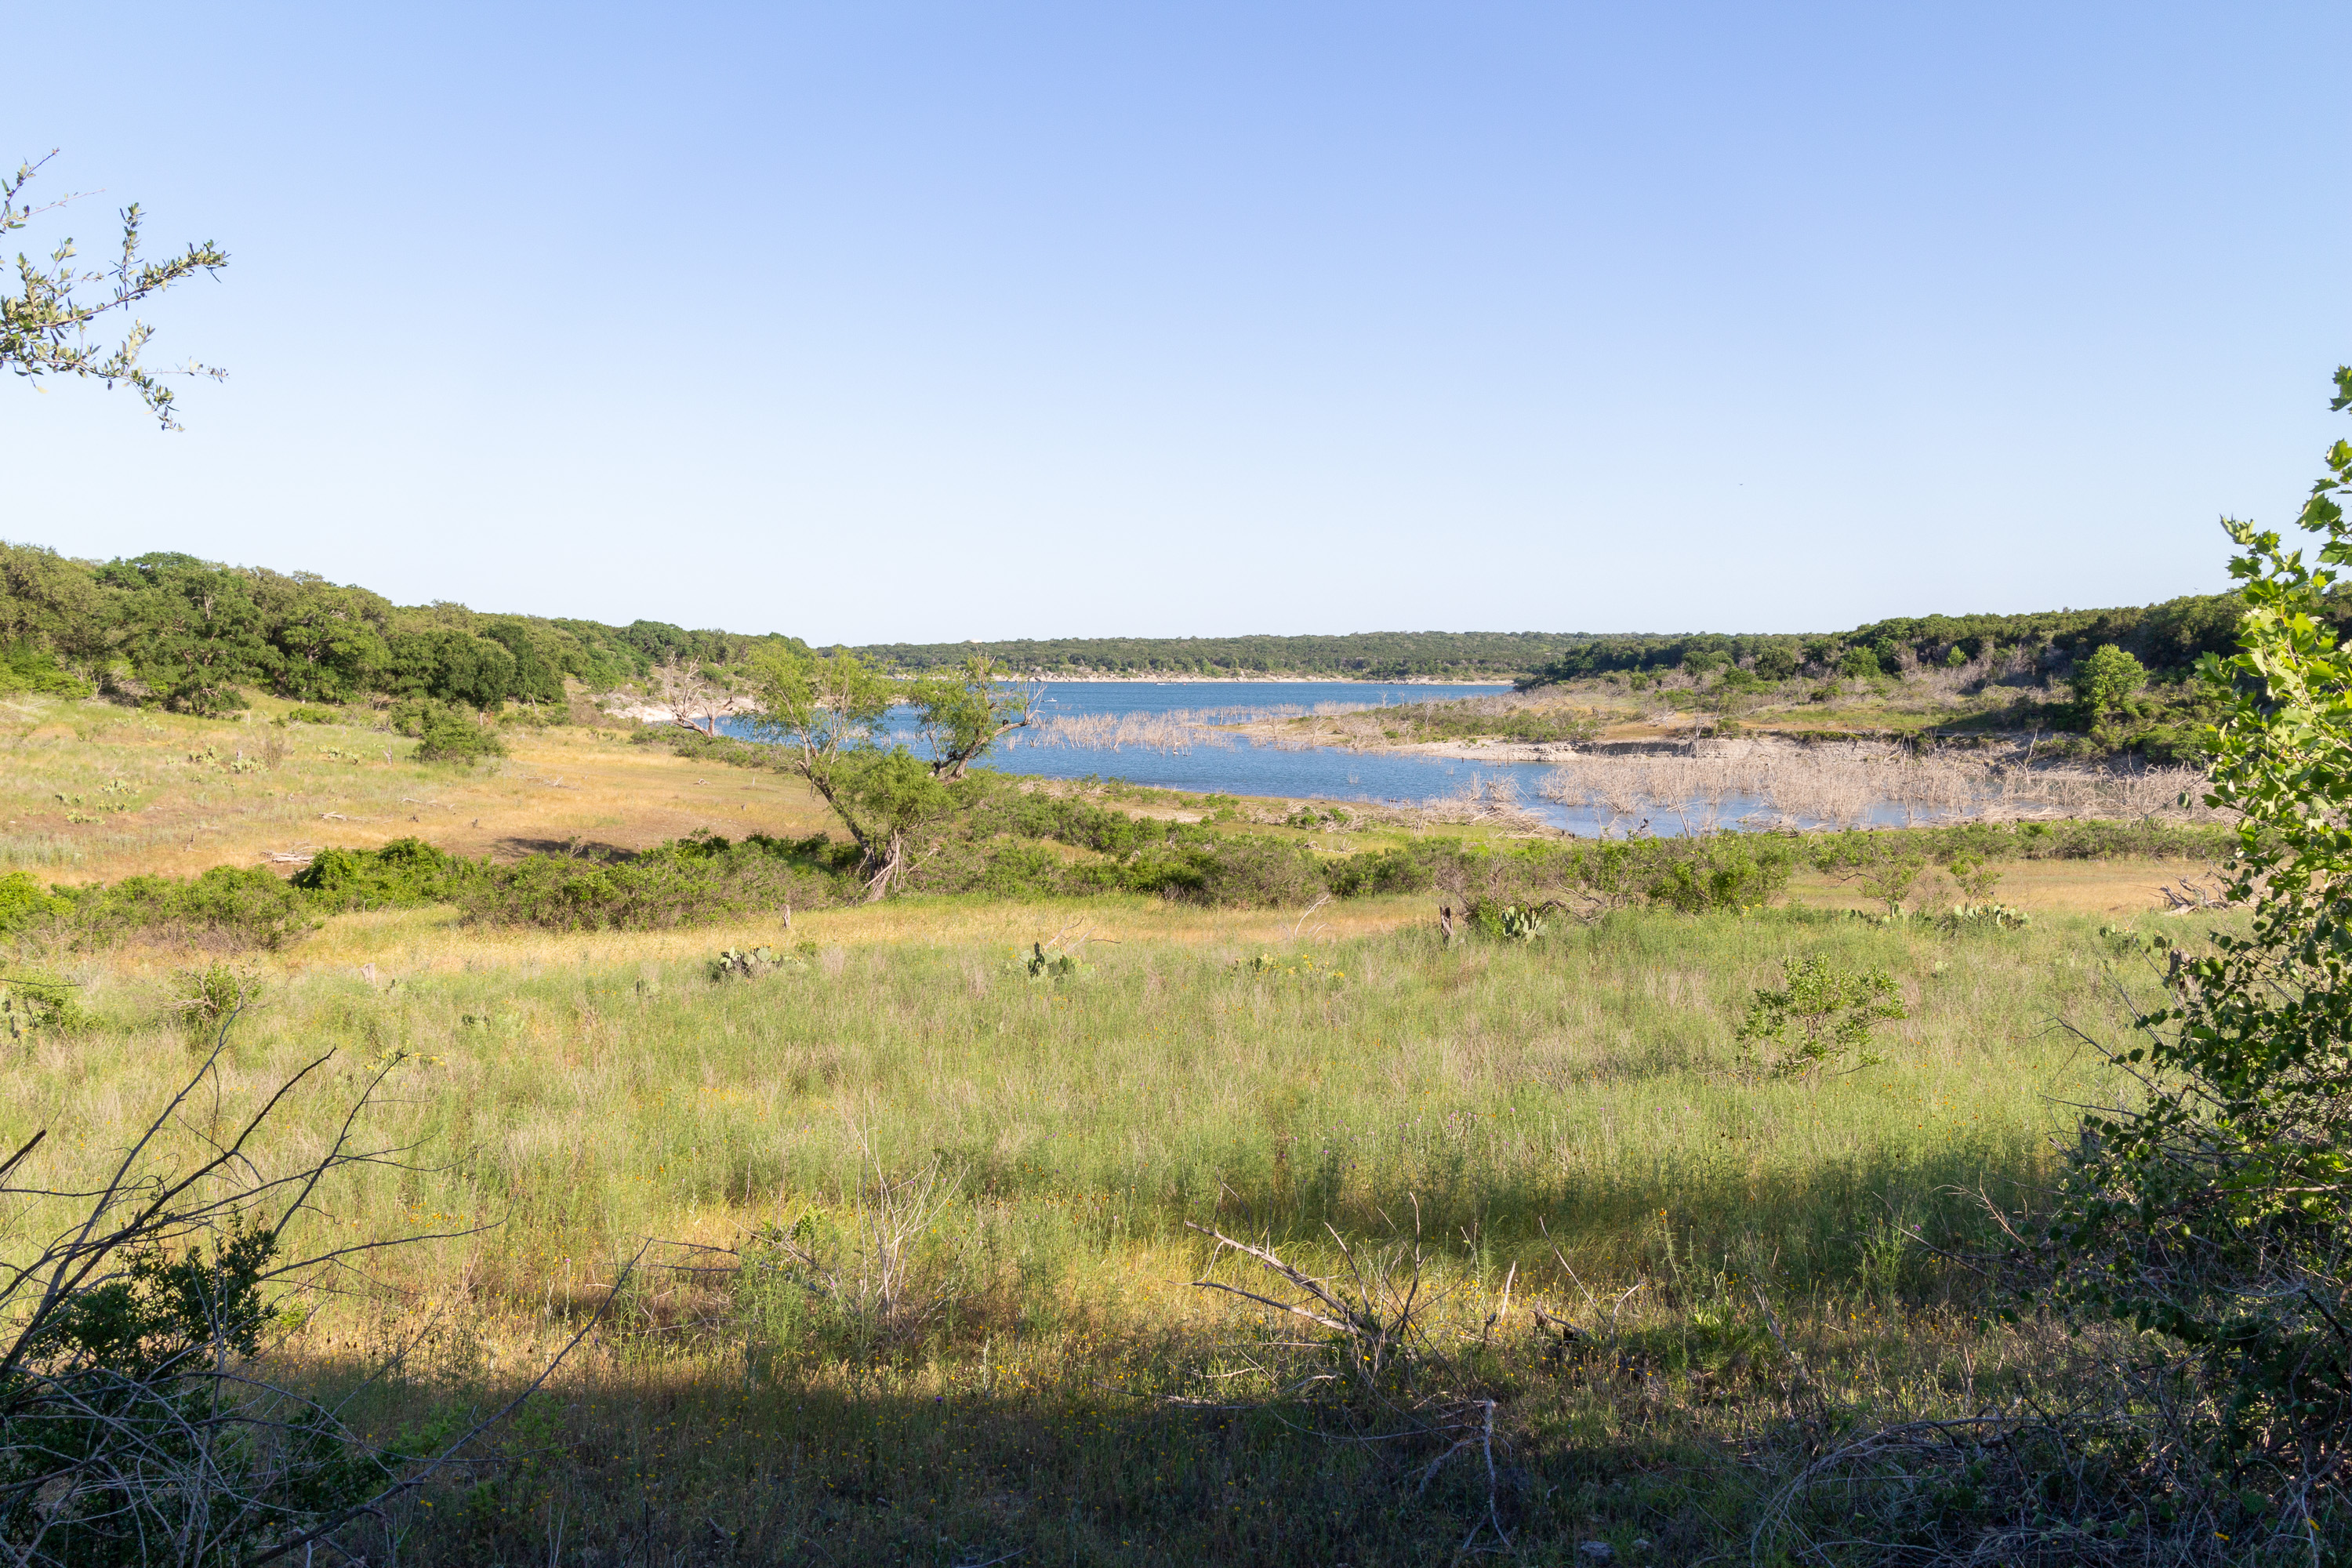 Landscape shot of a lake